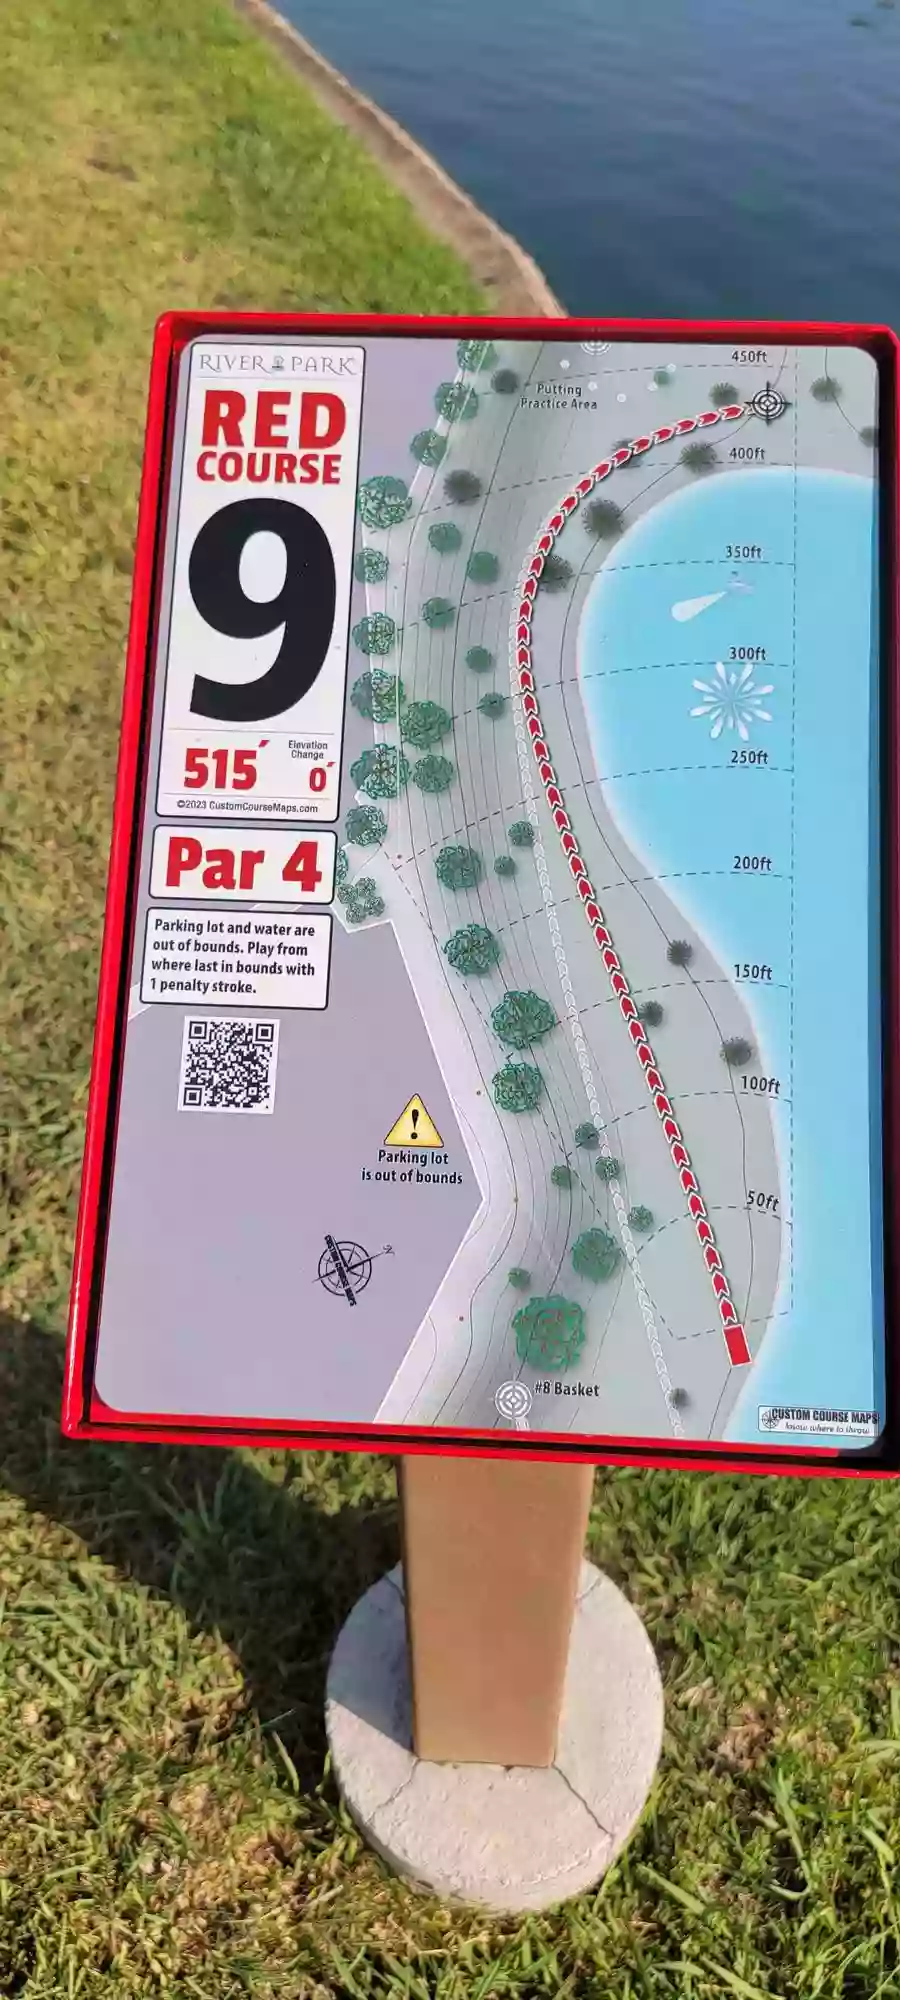 Riverpark Disc Golf Course